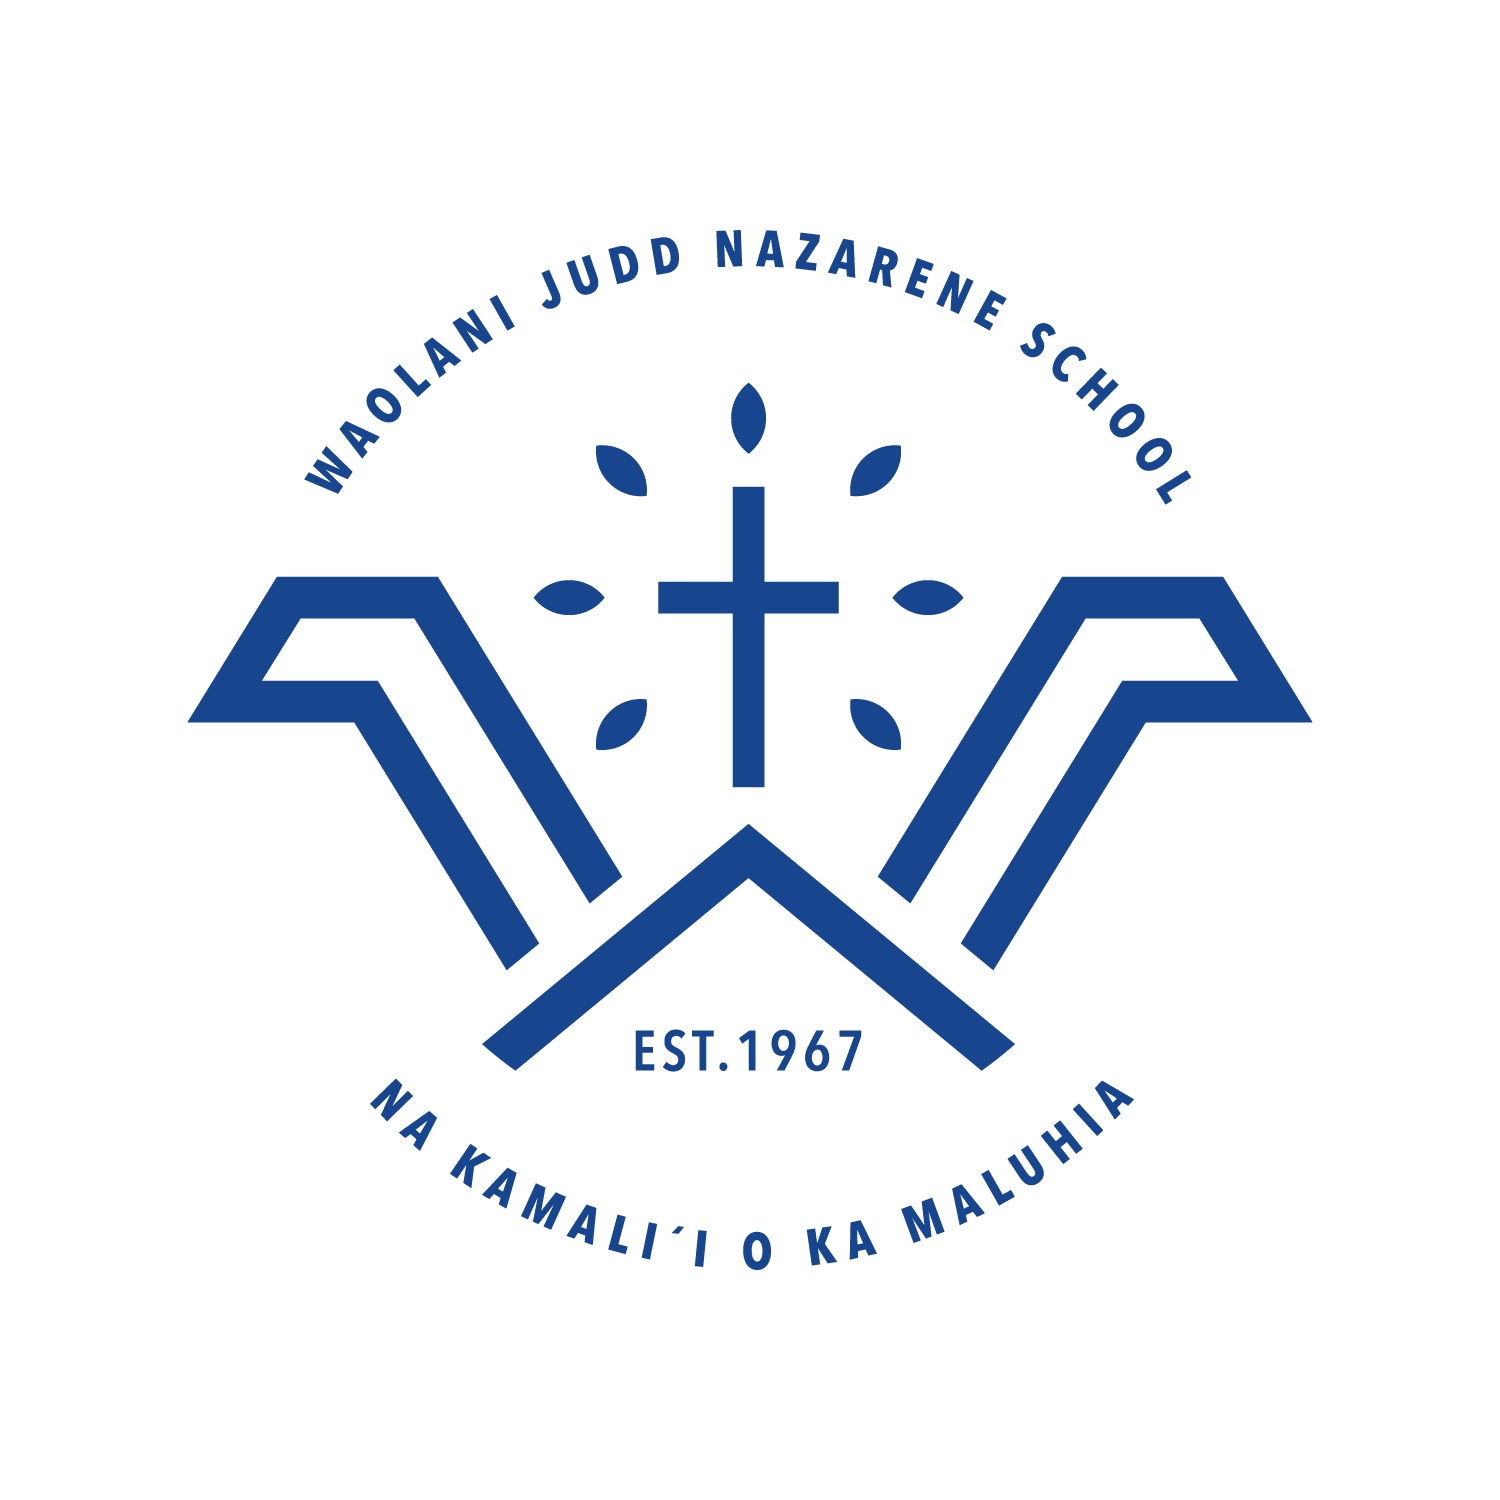 WAOLANI-JUDD NAZARENE SCHOOL